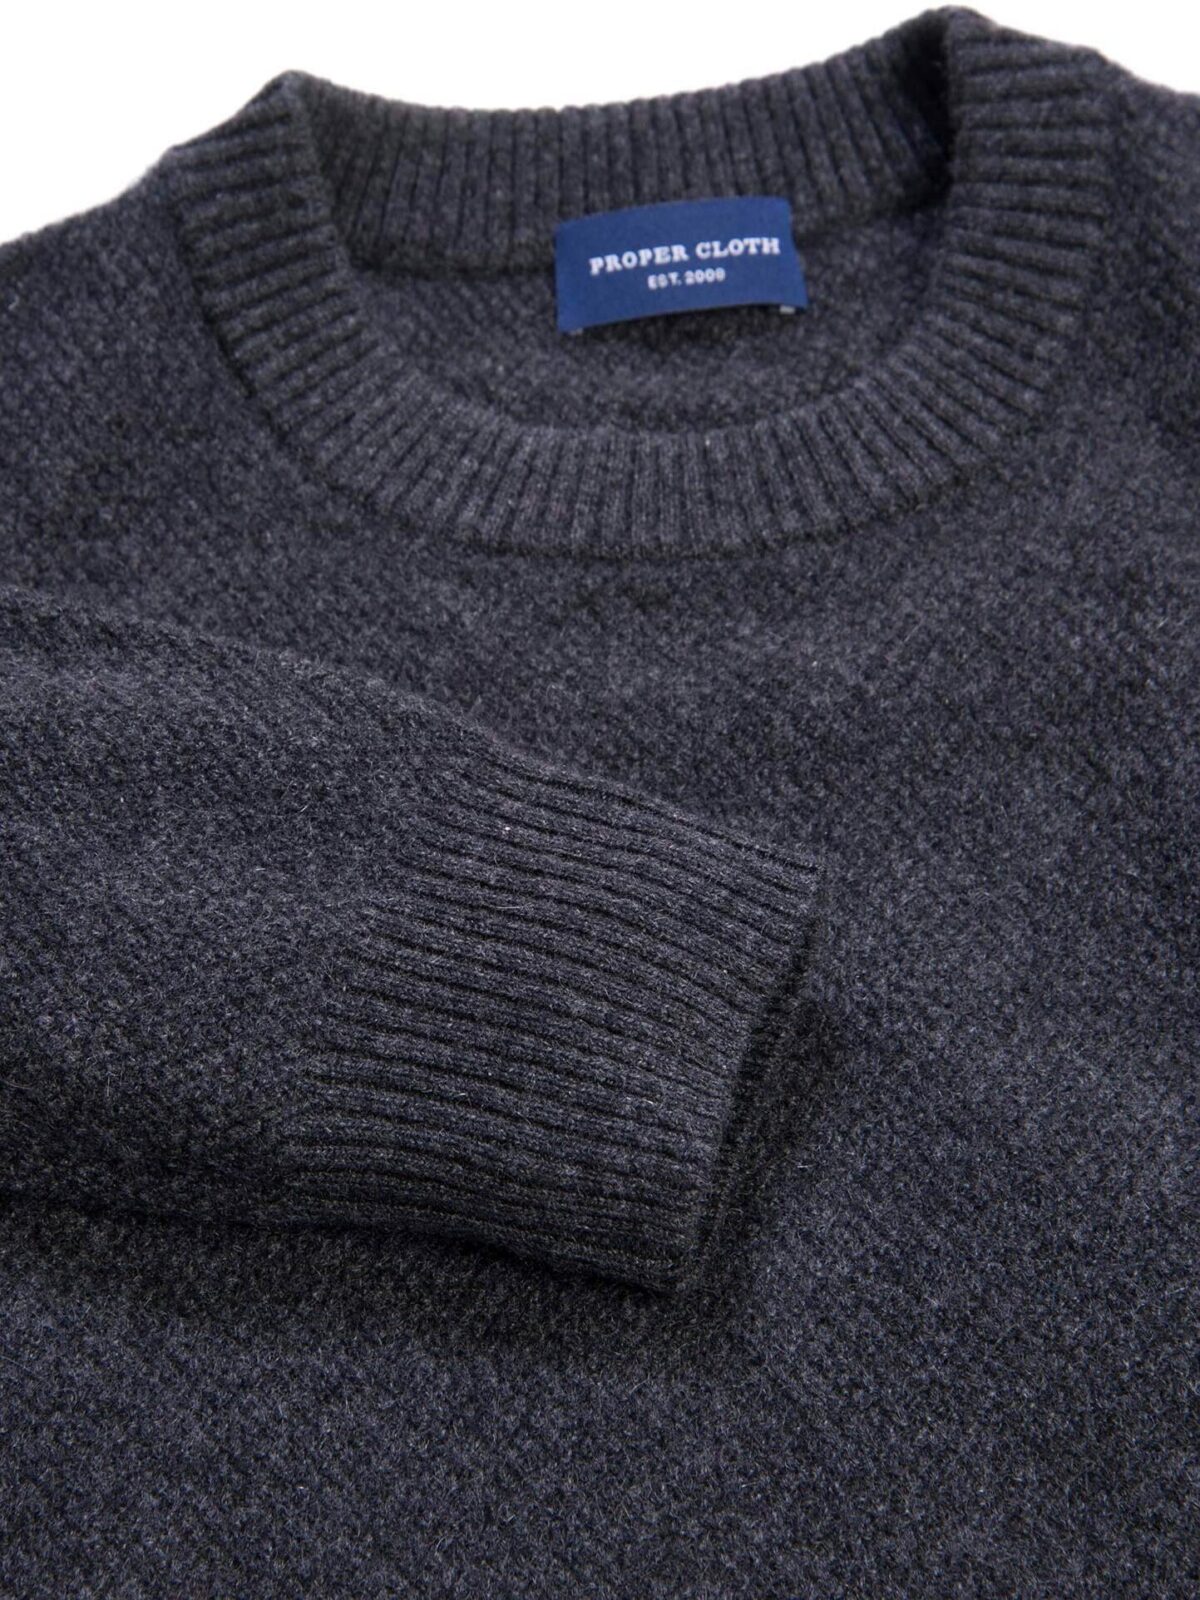 Charcoal Cobble Stitch Cashmere Sweater